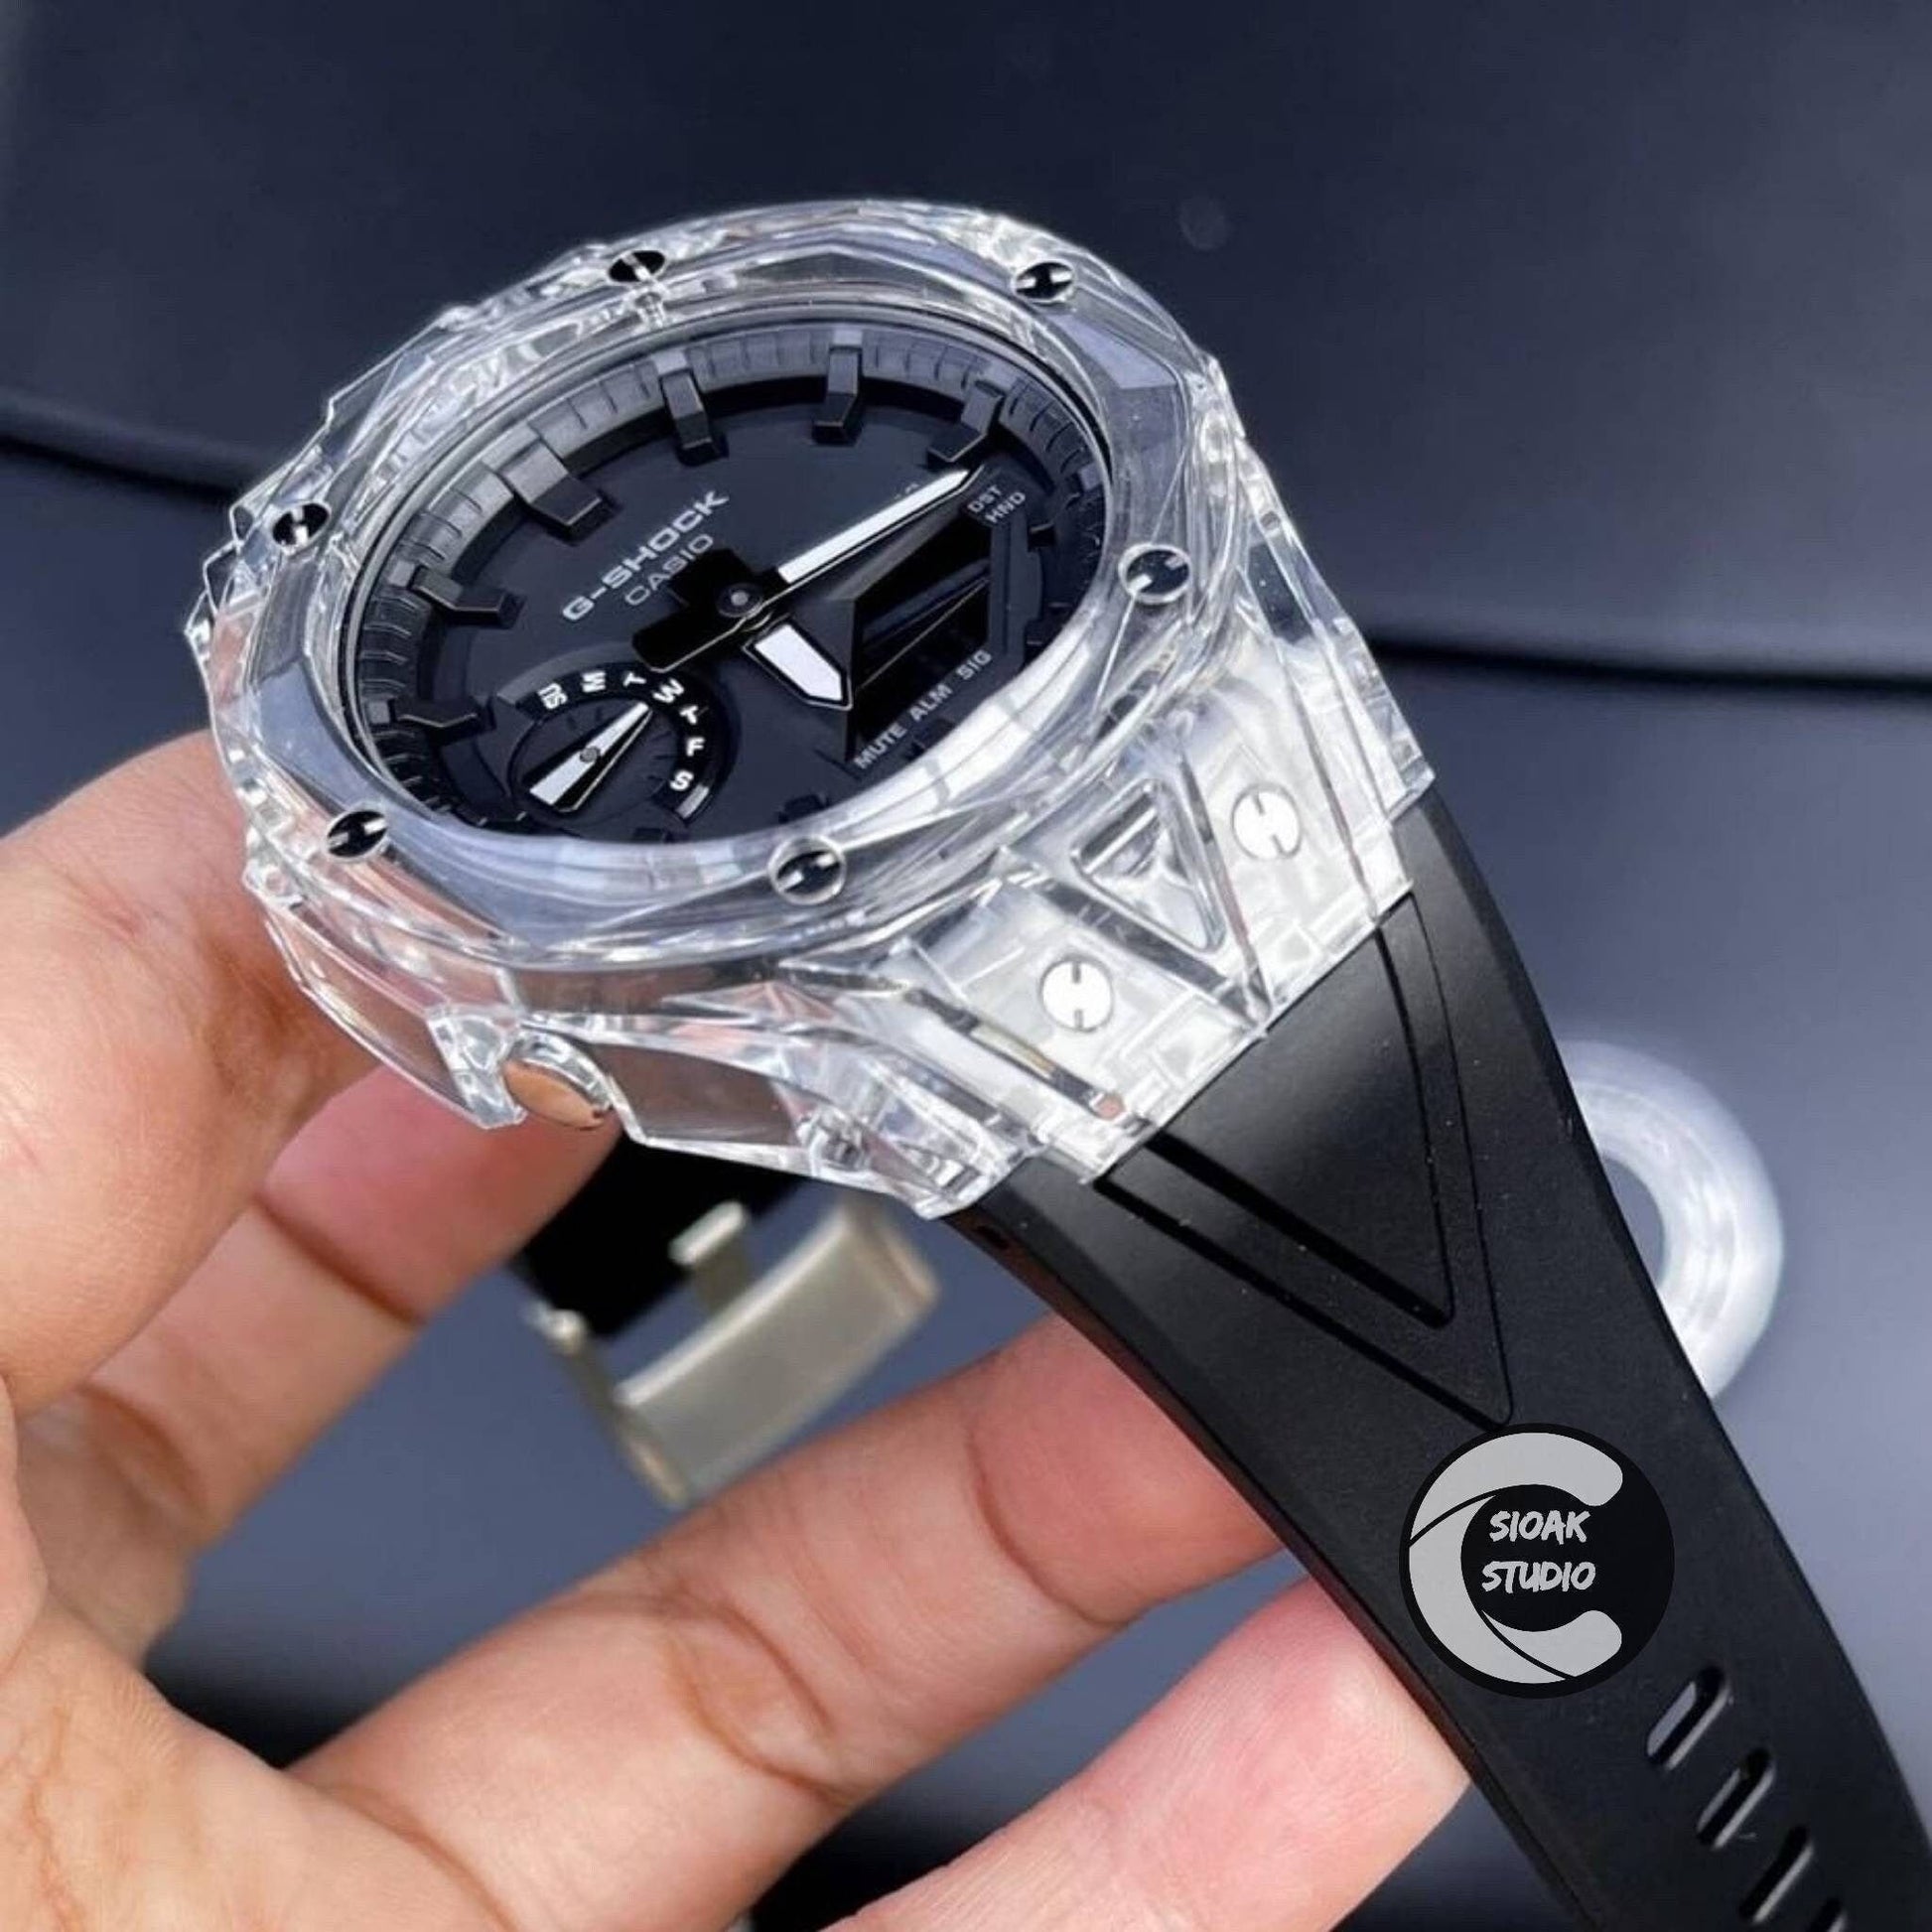 Casioak Mod Watch Transparent Case Black Strap Black Time Mark Black Dial 44mm - Casioak Studio